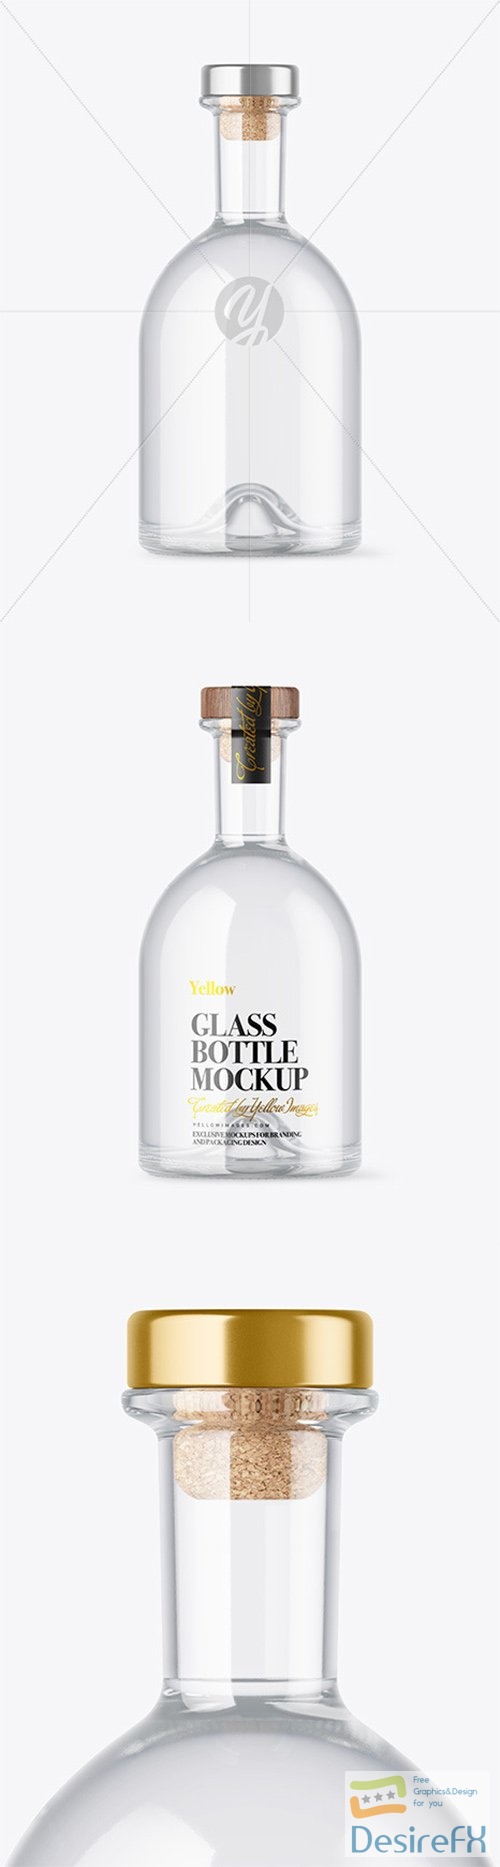 Clear Glass Vodka Bottle with Wooden Cap Mockup 79765 TIF